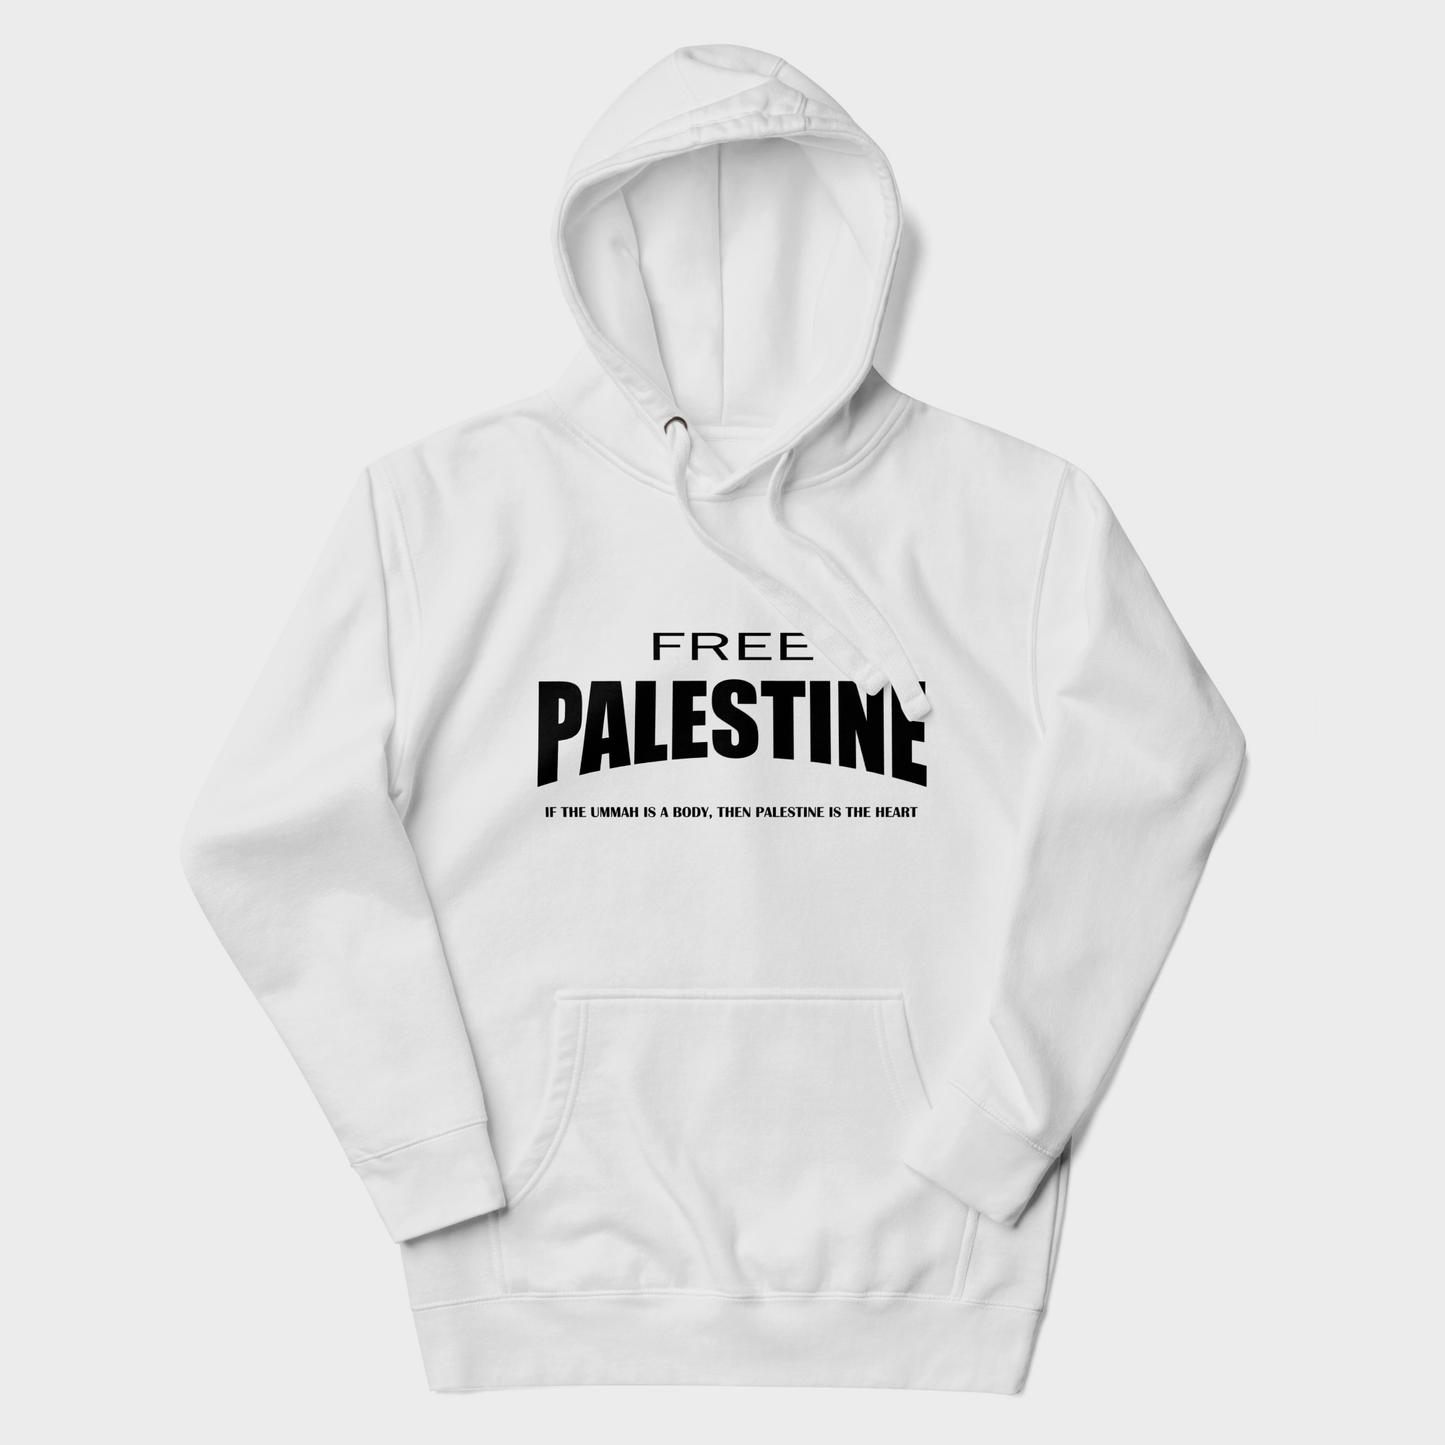 Free Palestine Hoodie - White